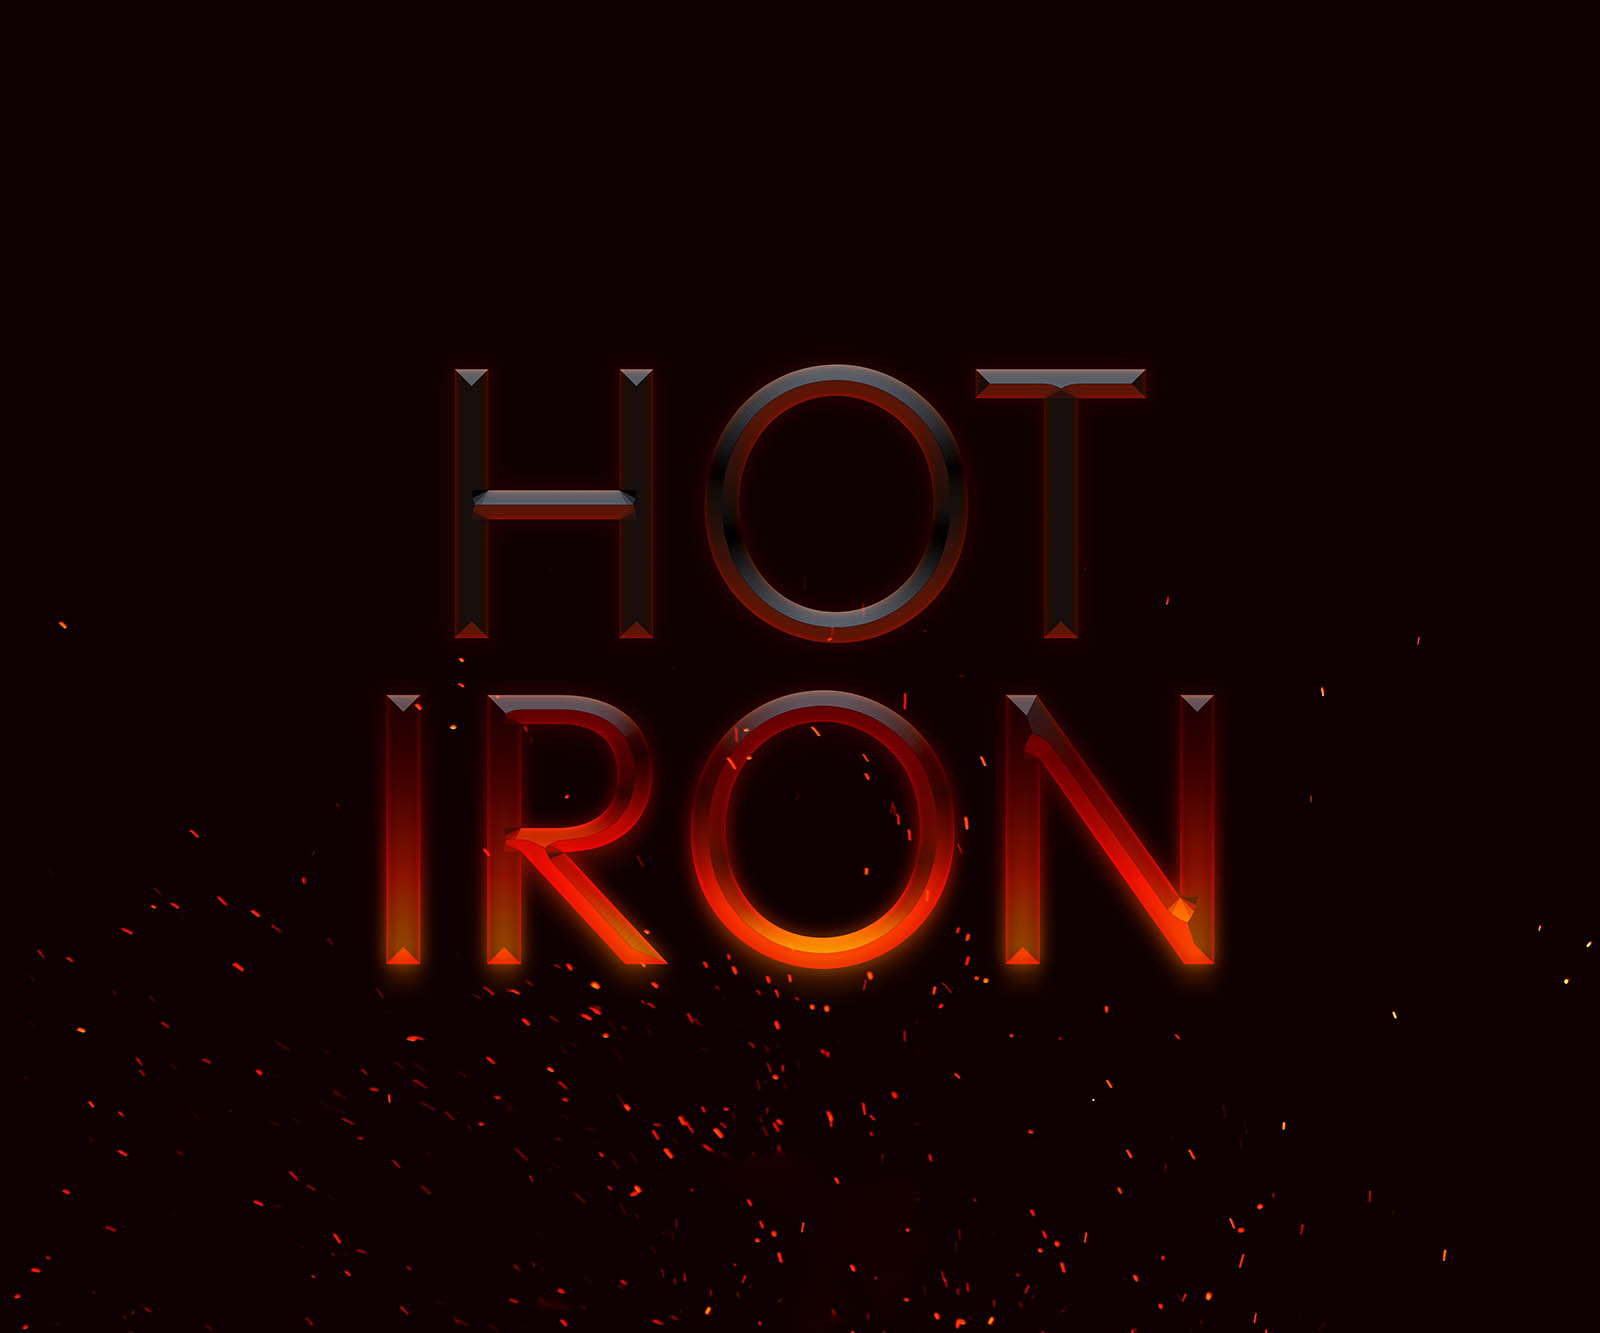 Hot Burning Iron Text Effect PSD File